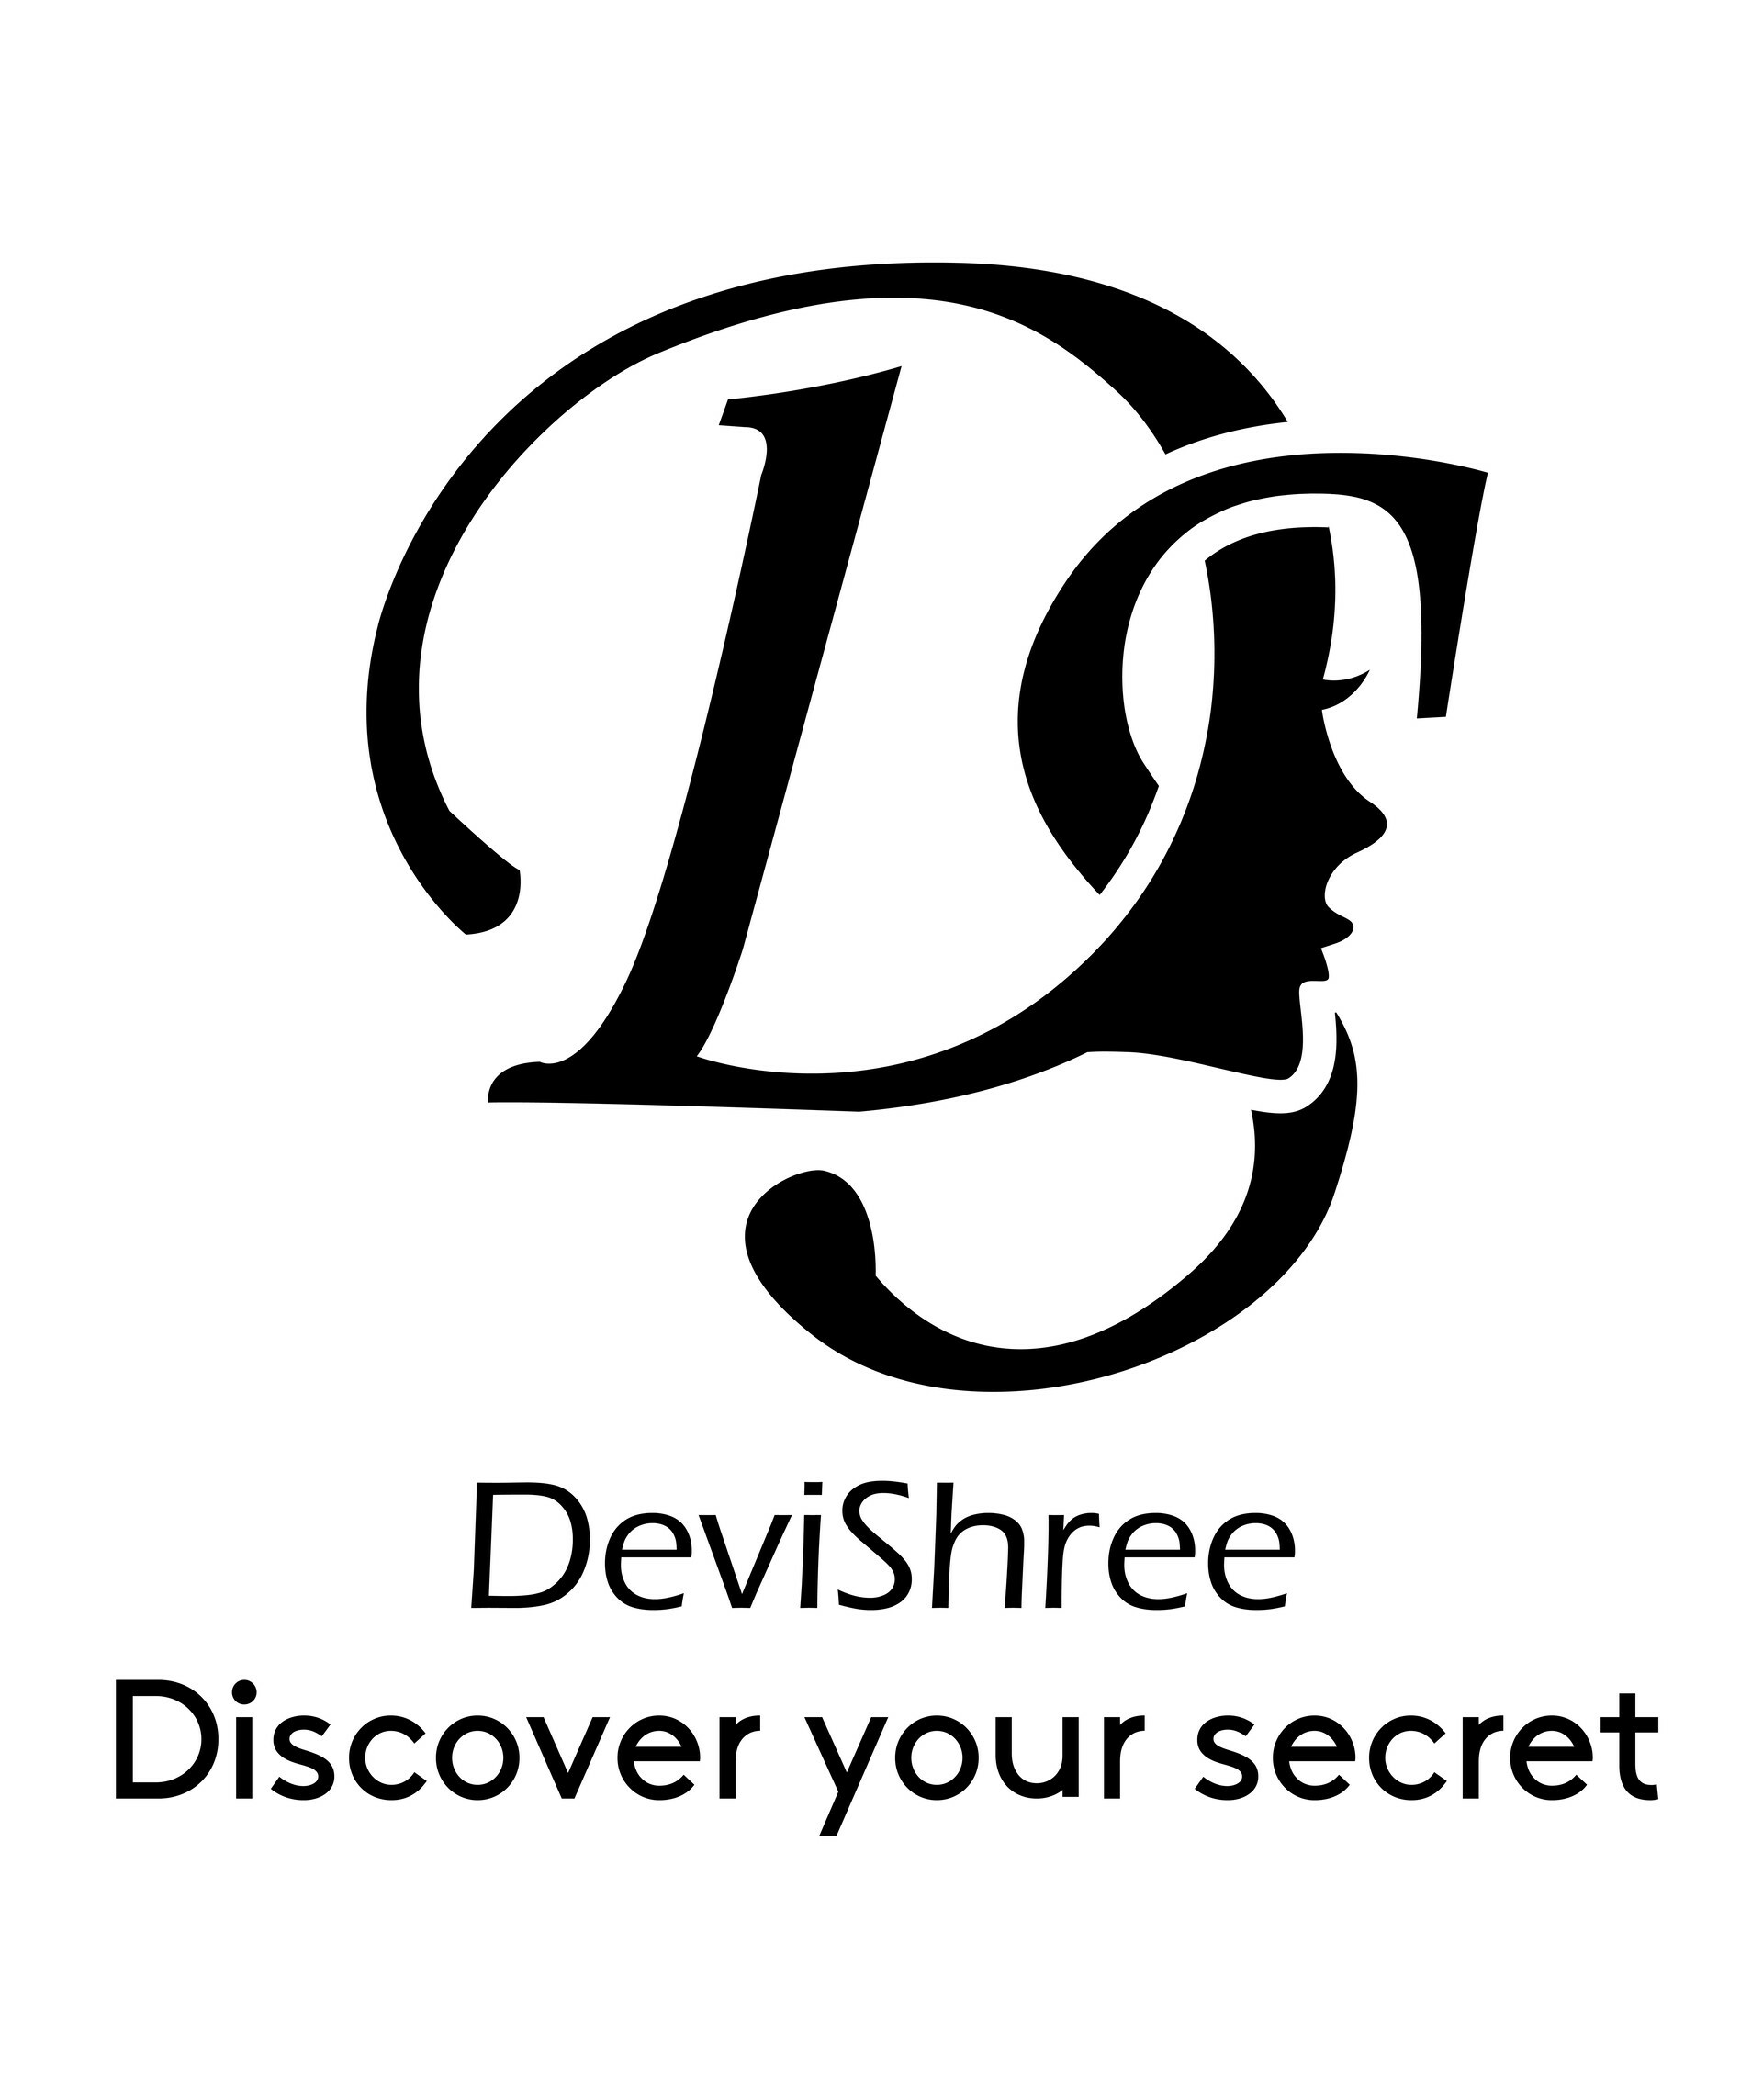 Devi Corporation Logo PNG Transparent & SVG Vector - Freebie Supply